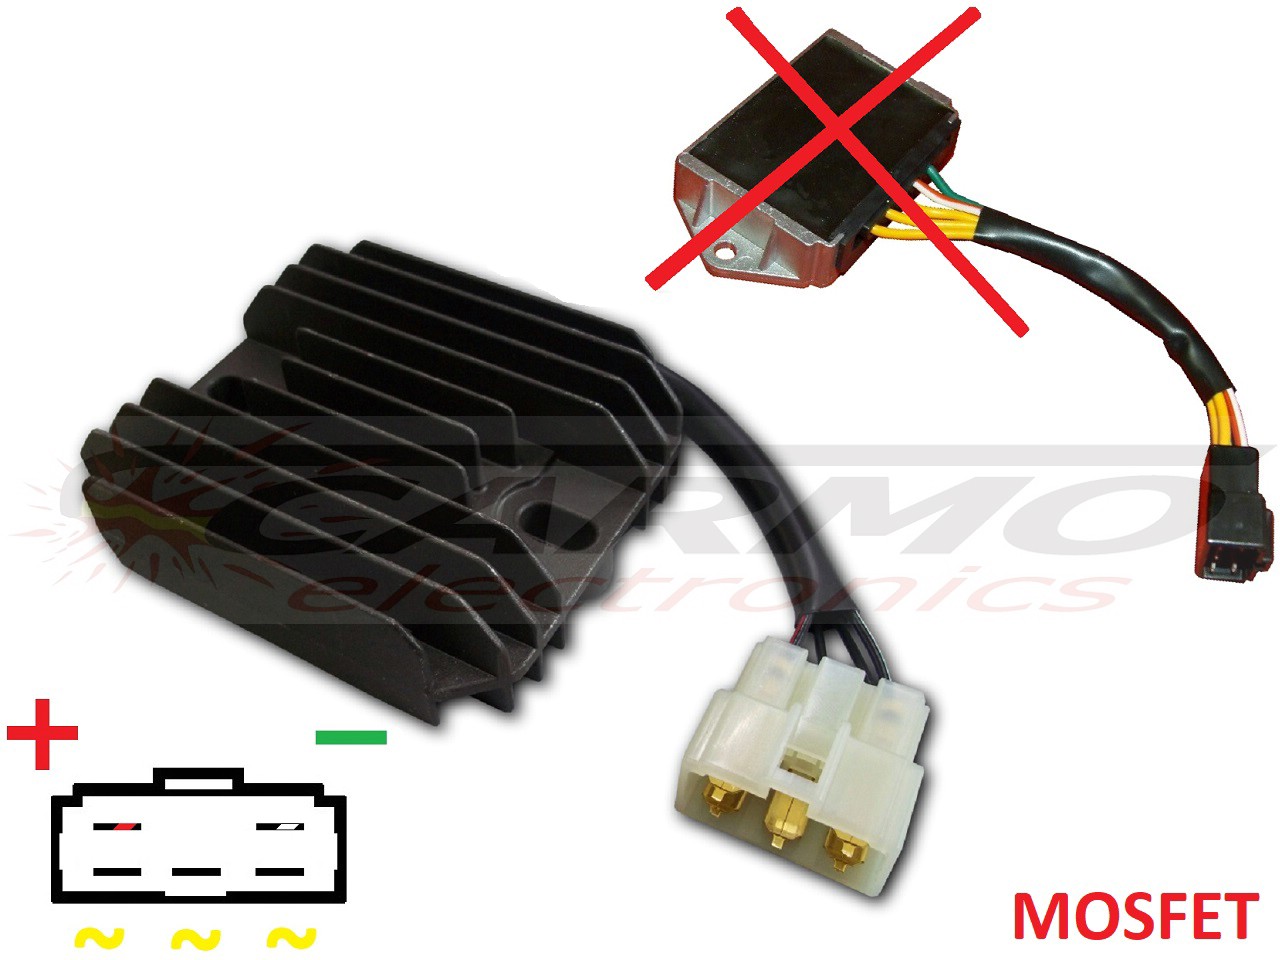 CARR201 - MOSFET Gasgas Gas Gas Spanningsregelaar gelijkrichter (MFS450434009 Ducati) - Clique na Imagem para Fechar